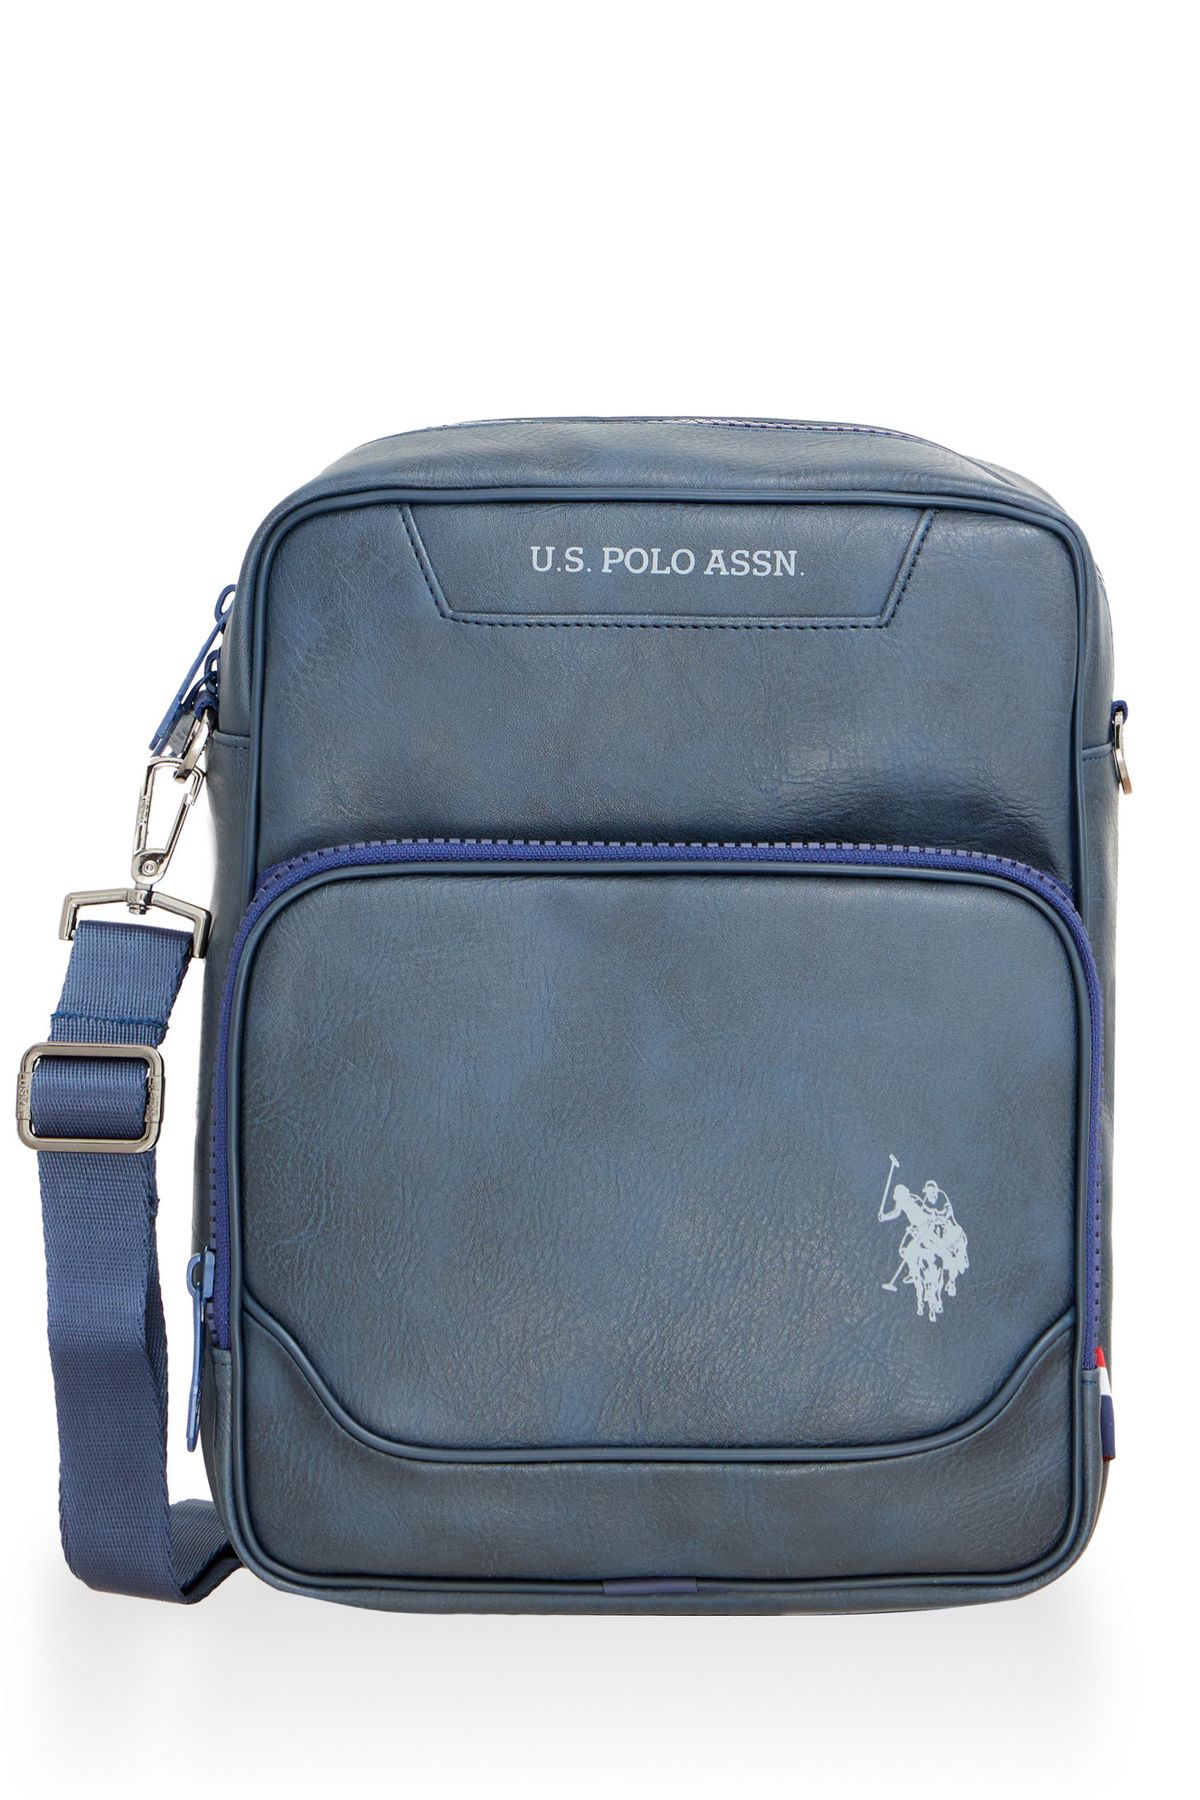 U.S. Polo Assn. U.S. Polo Assn. 23662-23661 Postacı Çantası Çapraz Çanta LACİVERT